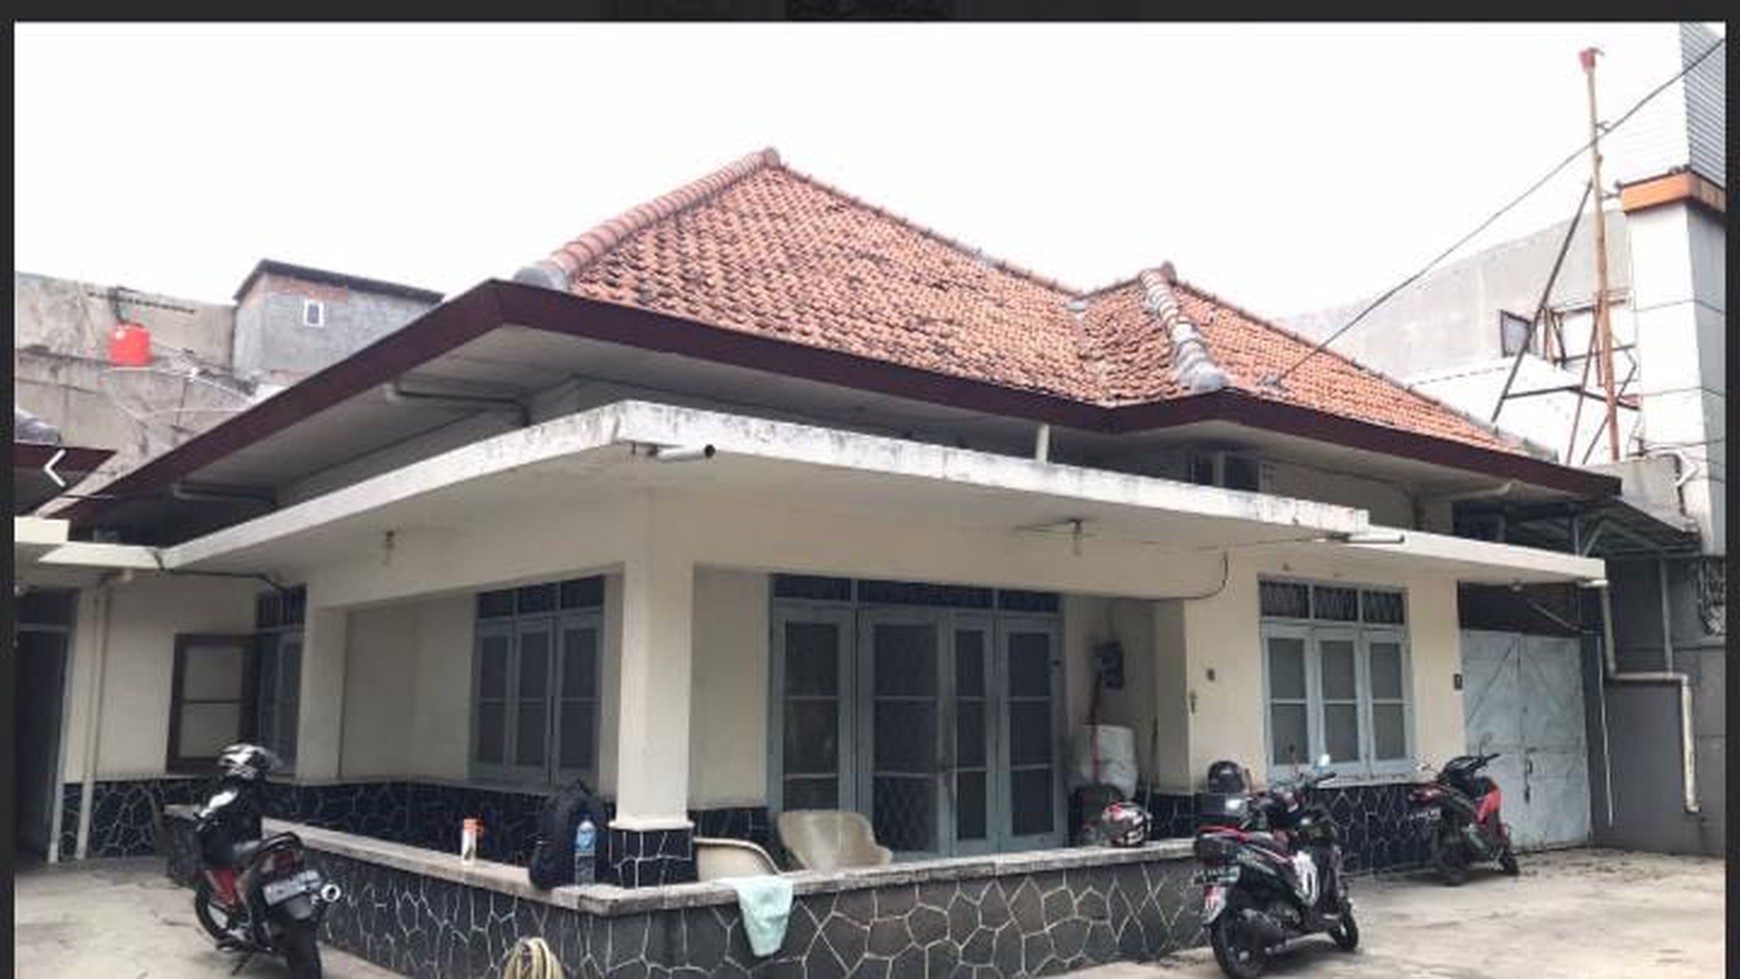 For sale House, Commercial Area in Batu Tulis Raya, Jakarta Pusat, DKI Jakarta